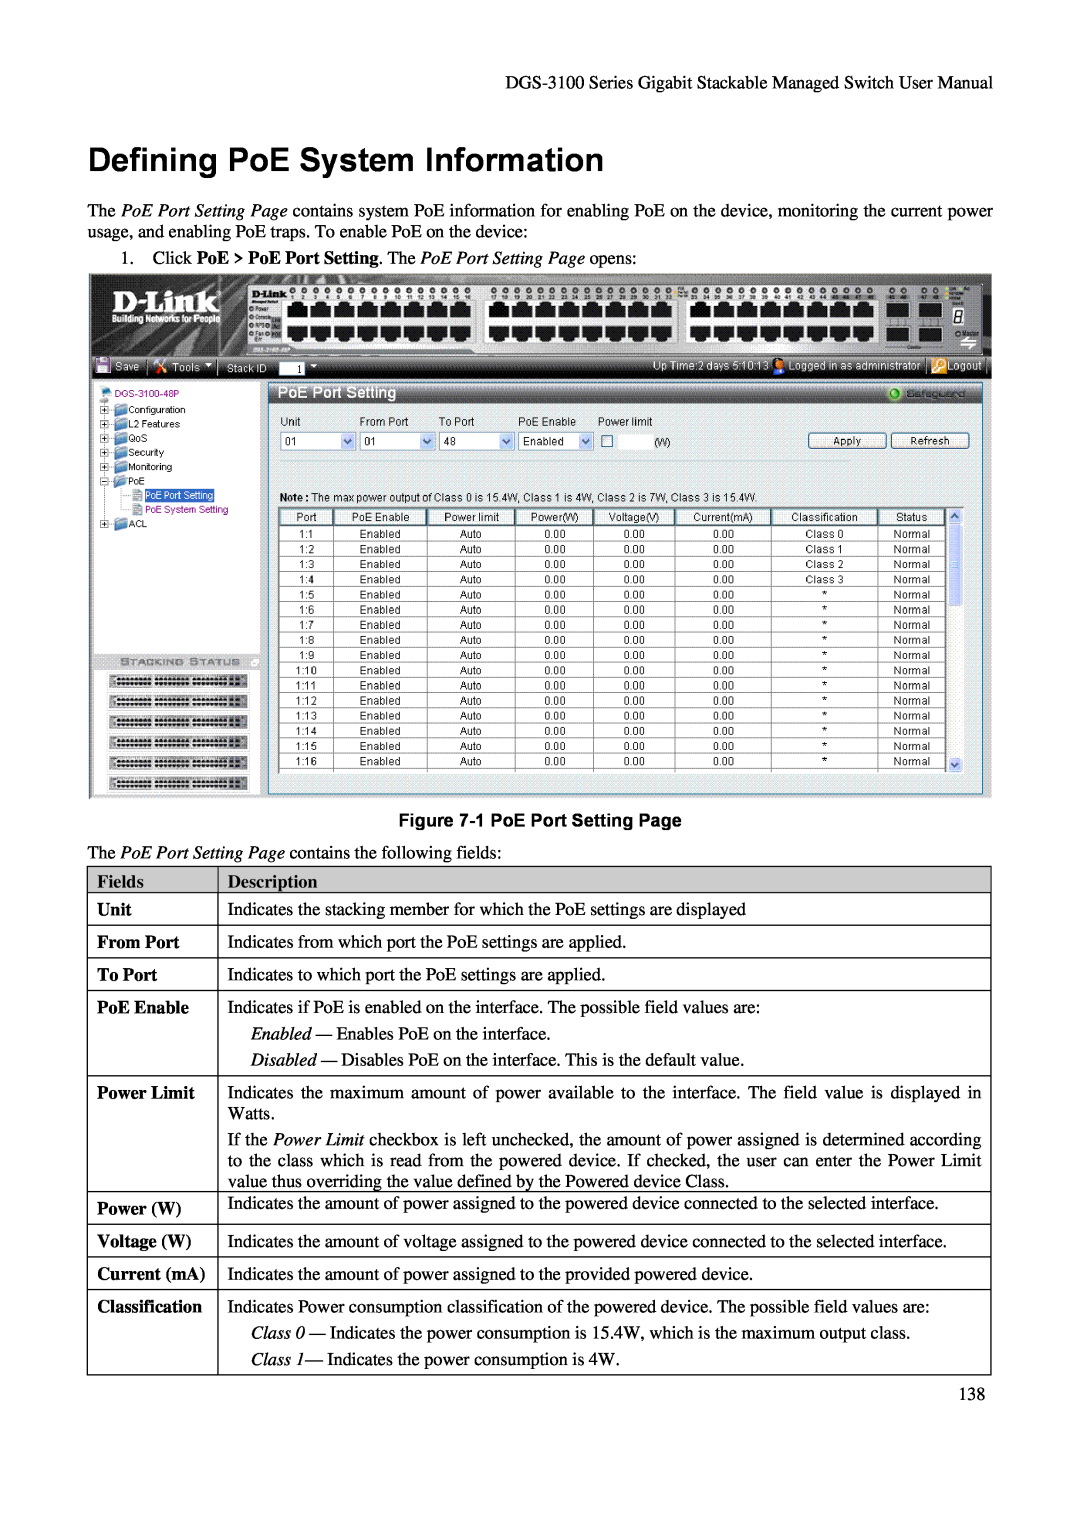 D-Link DGS-3100 Defining PoE System Information, Click PoE PoE Port Setting. The PoE Port Setting Page opens, Fields, Unit 